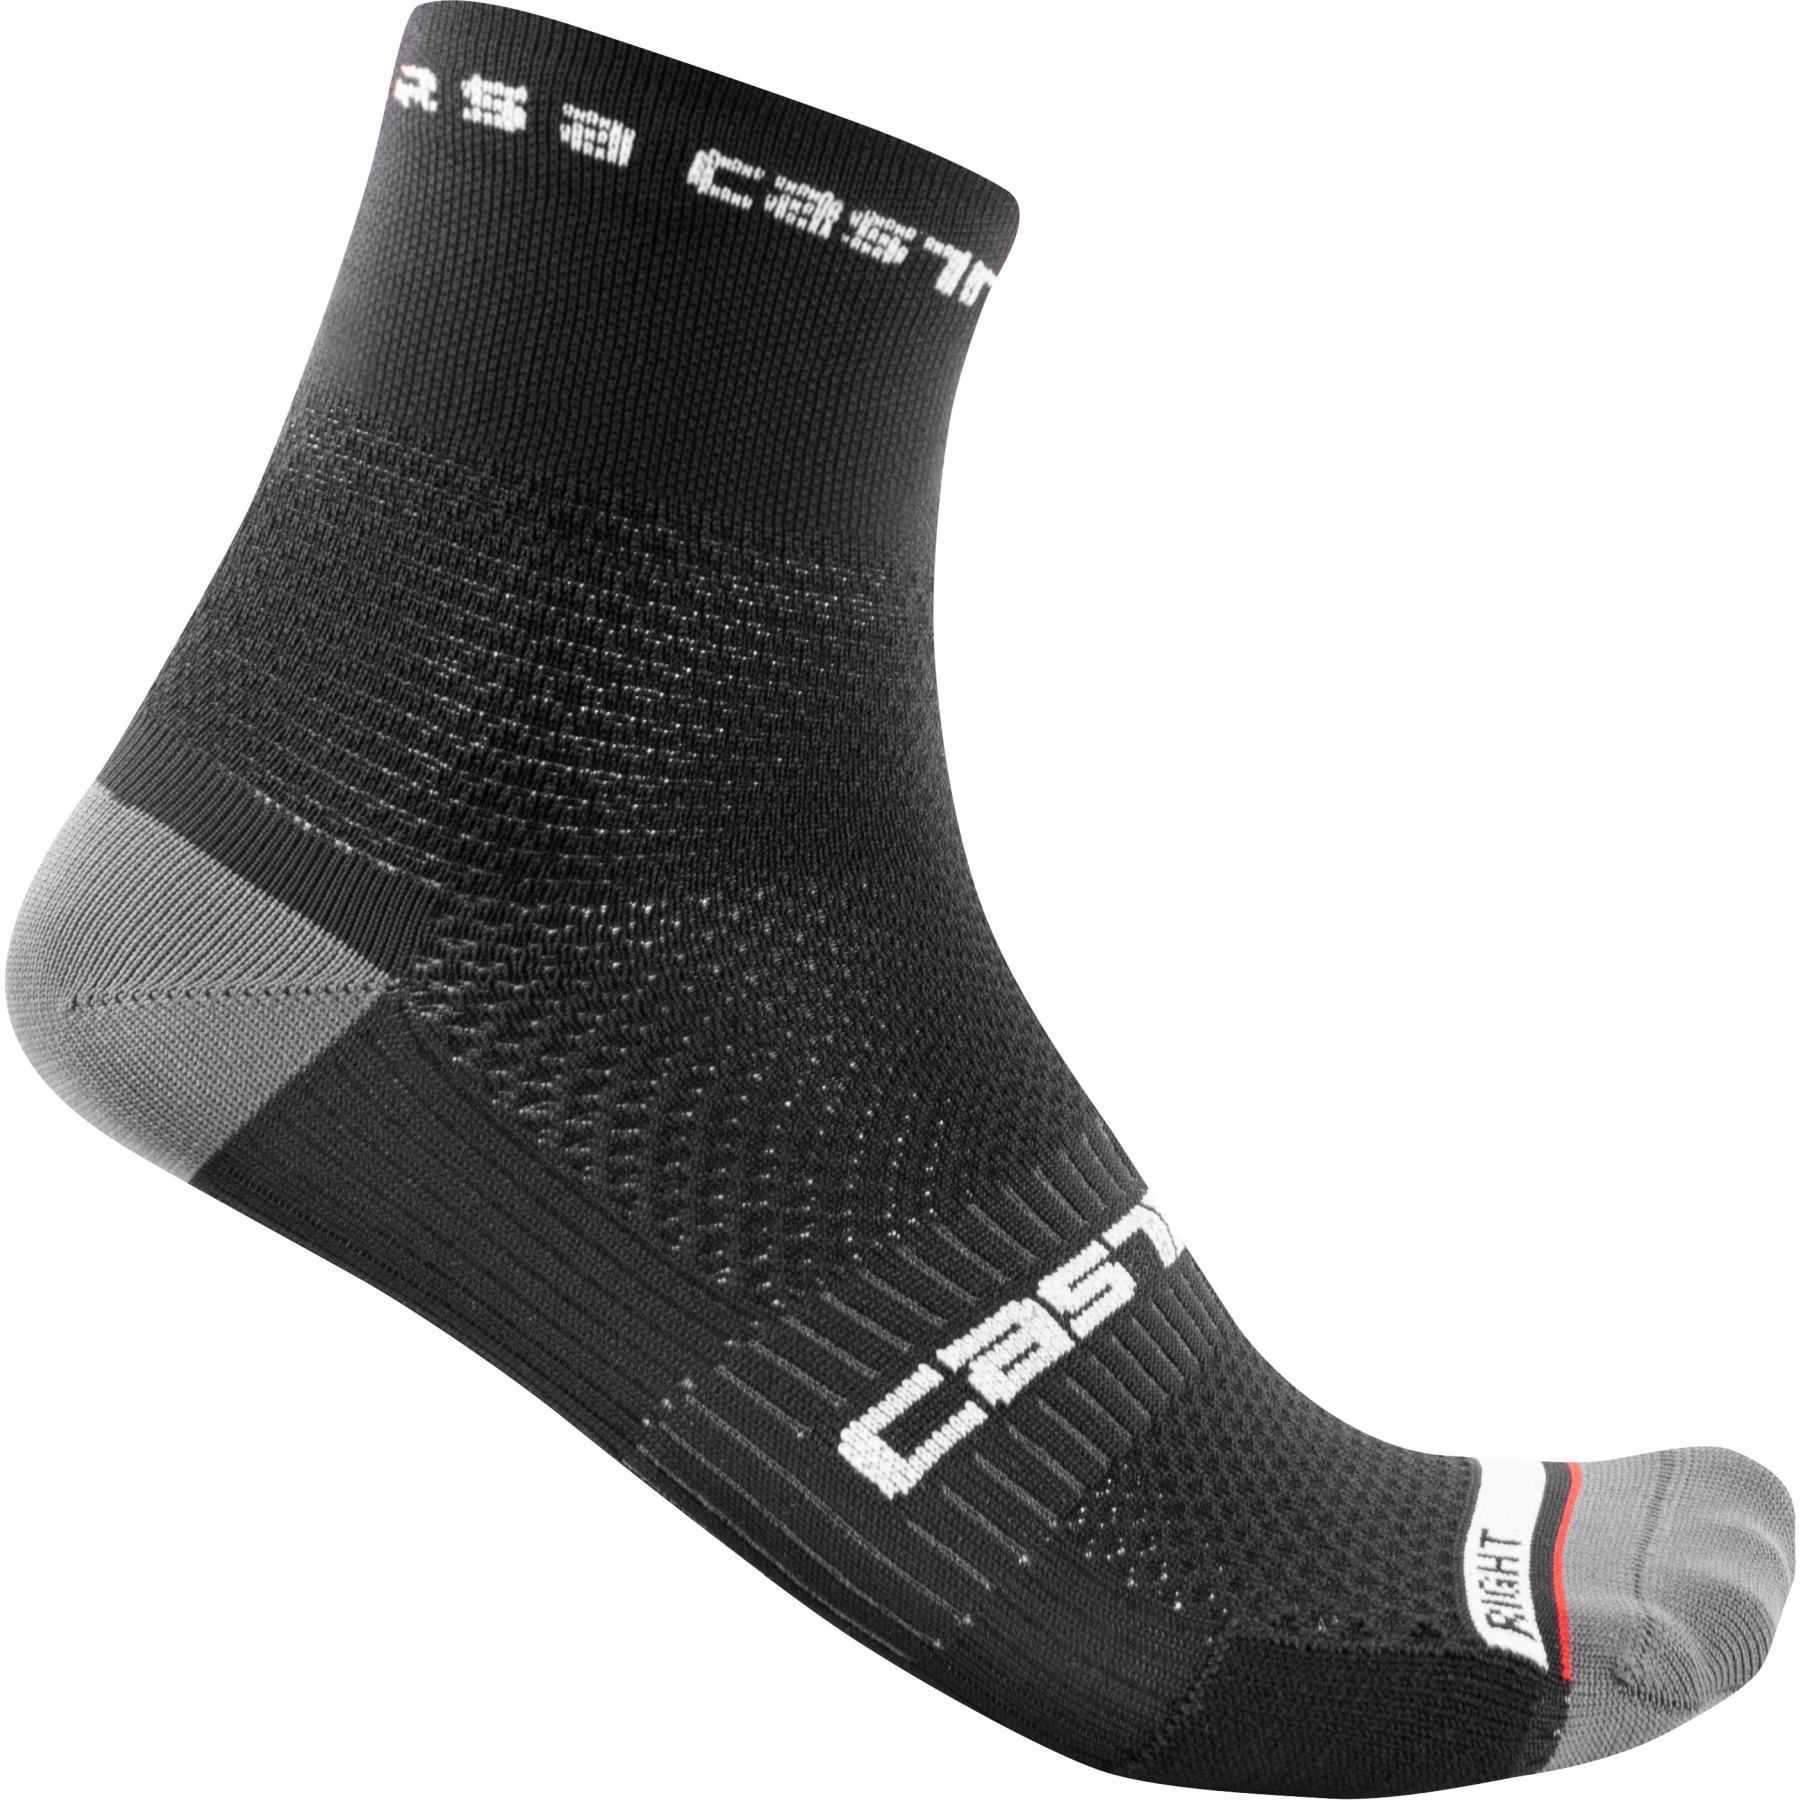 Image of Castelli Rosso Corsa Pro 9 Socks - black 010